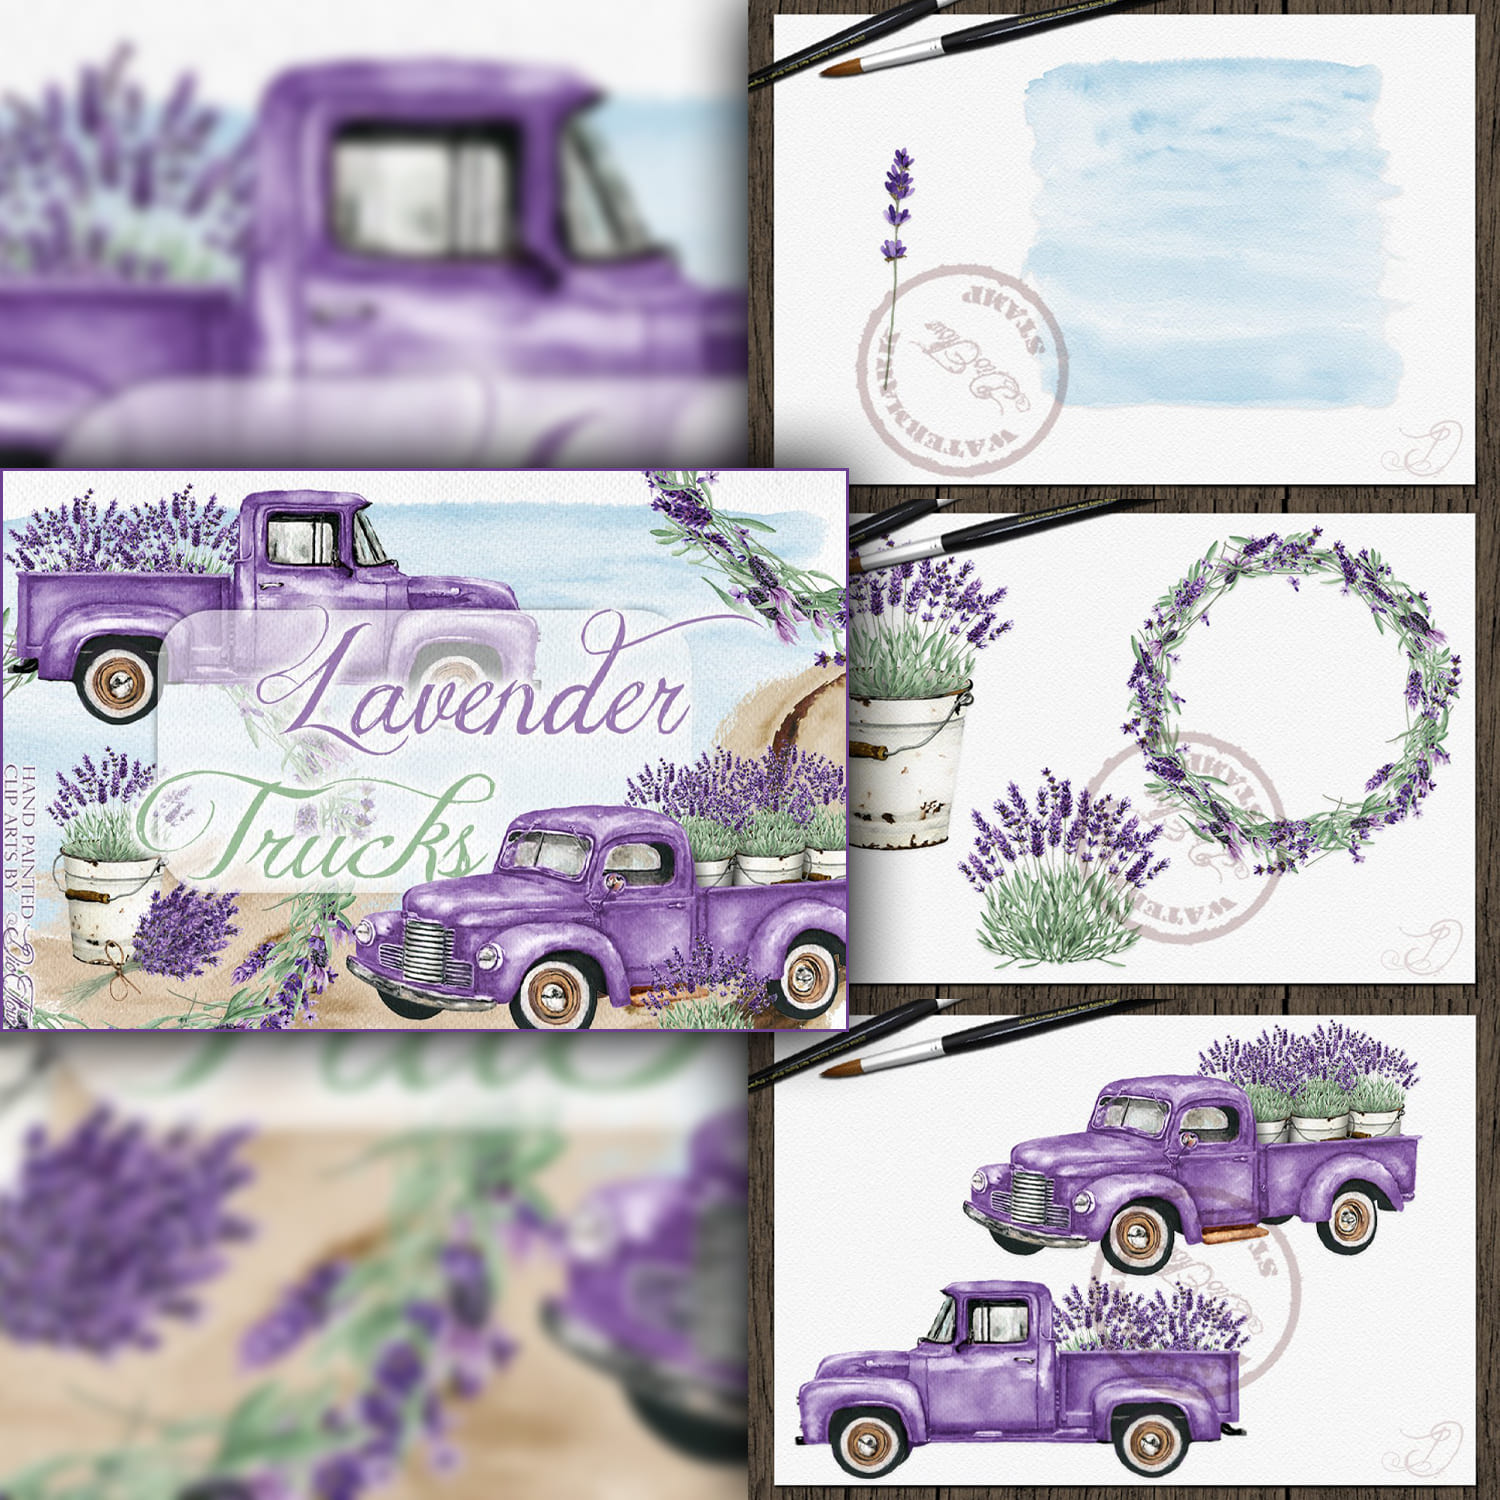 Lavender Truck Illustration cover.